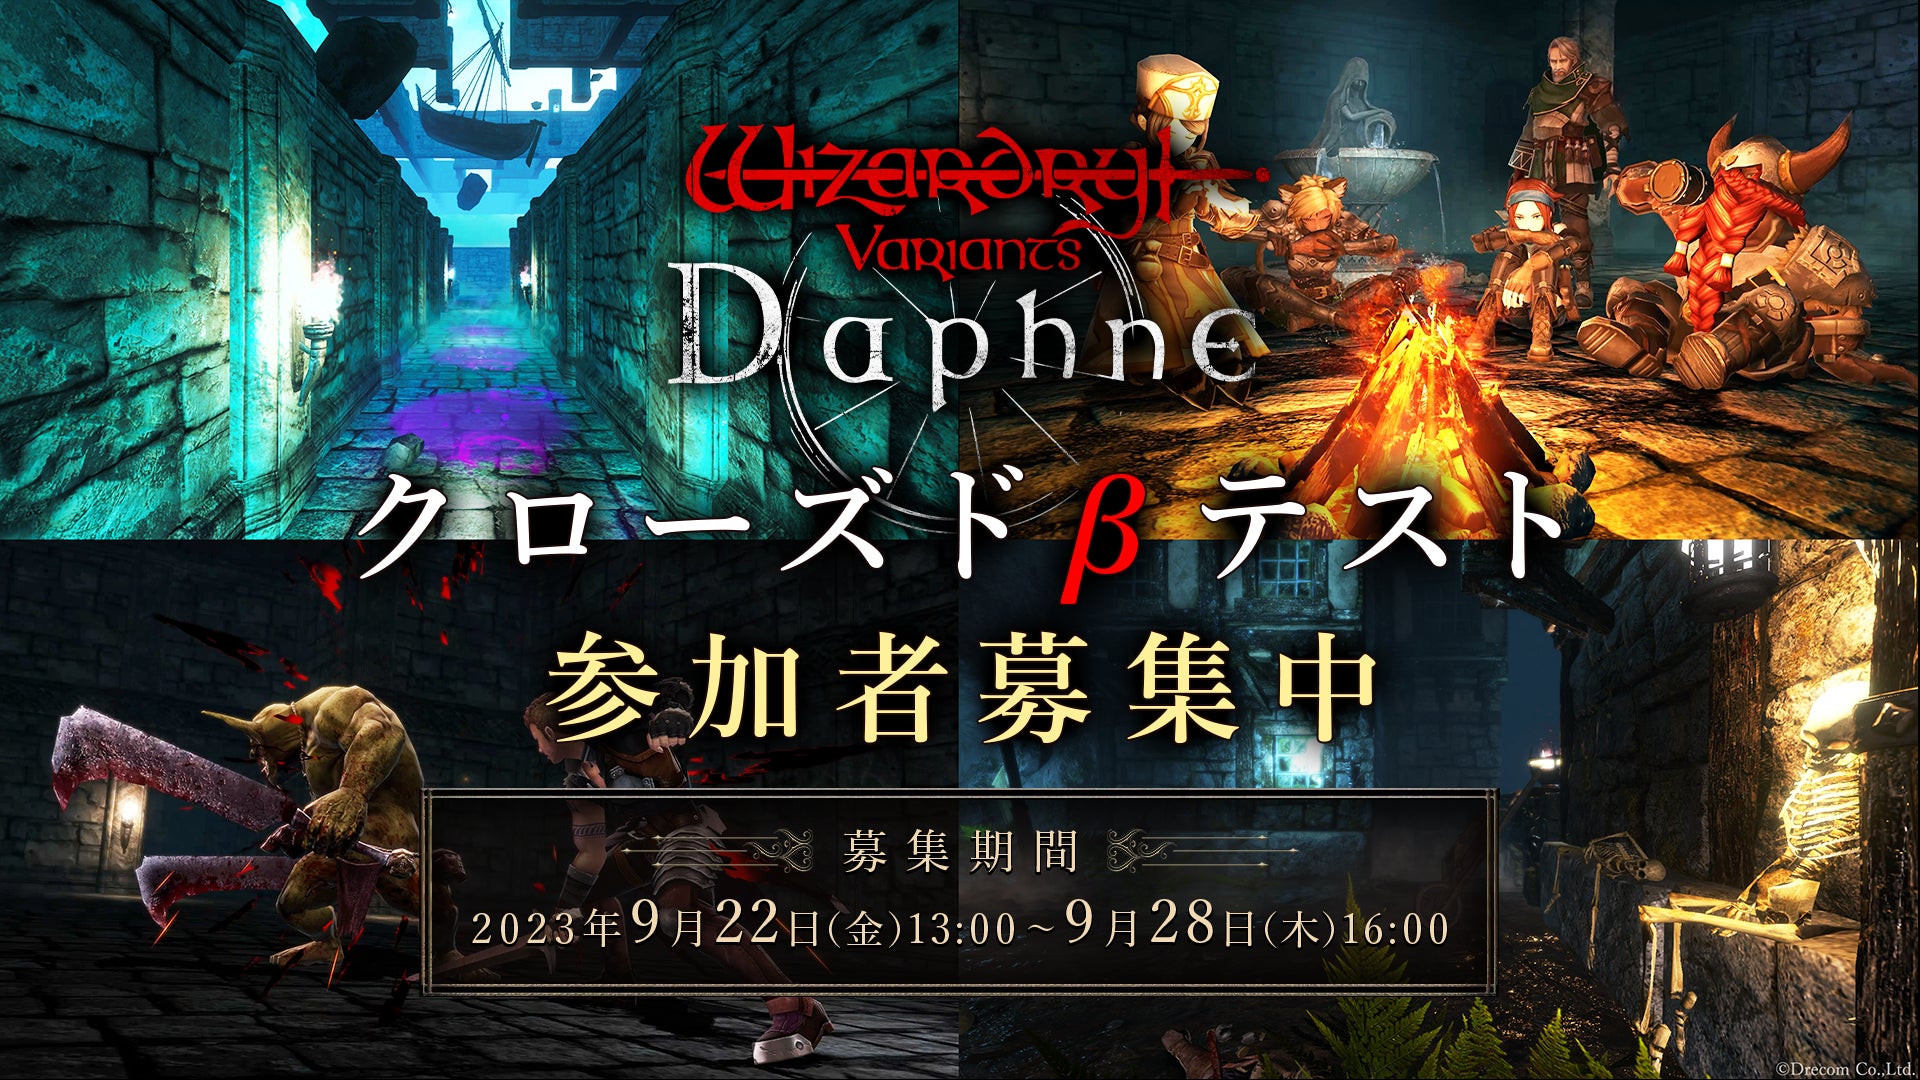 Wizardryシリーズ最新作スマホ向け3DダンジョンRPG『Wizardry Variants Daphne』クローズドβテスト実施決定！